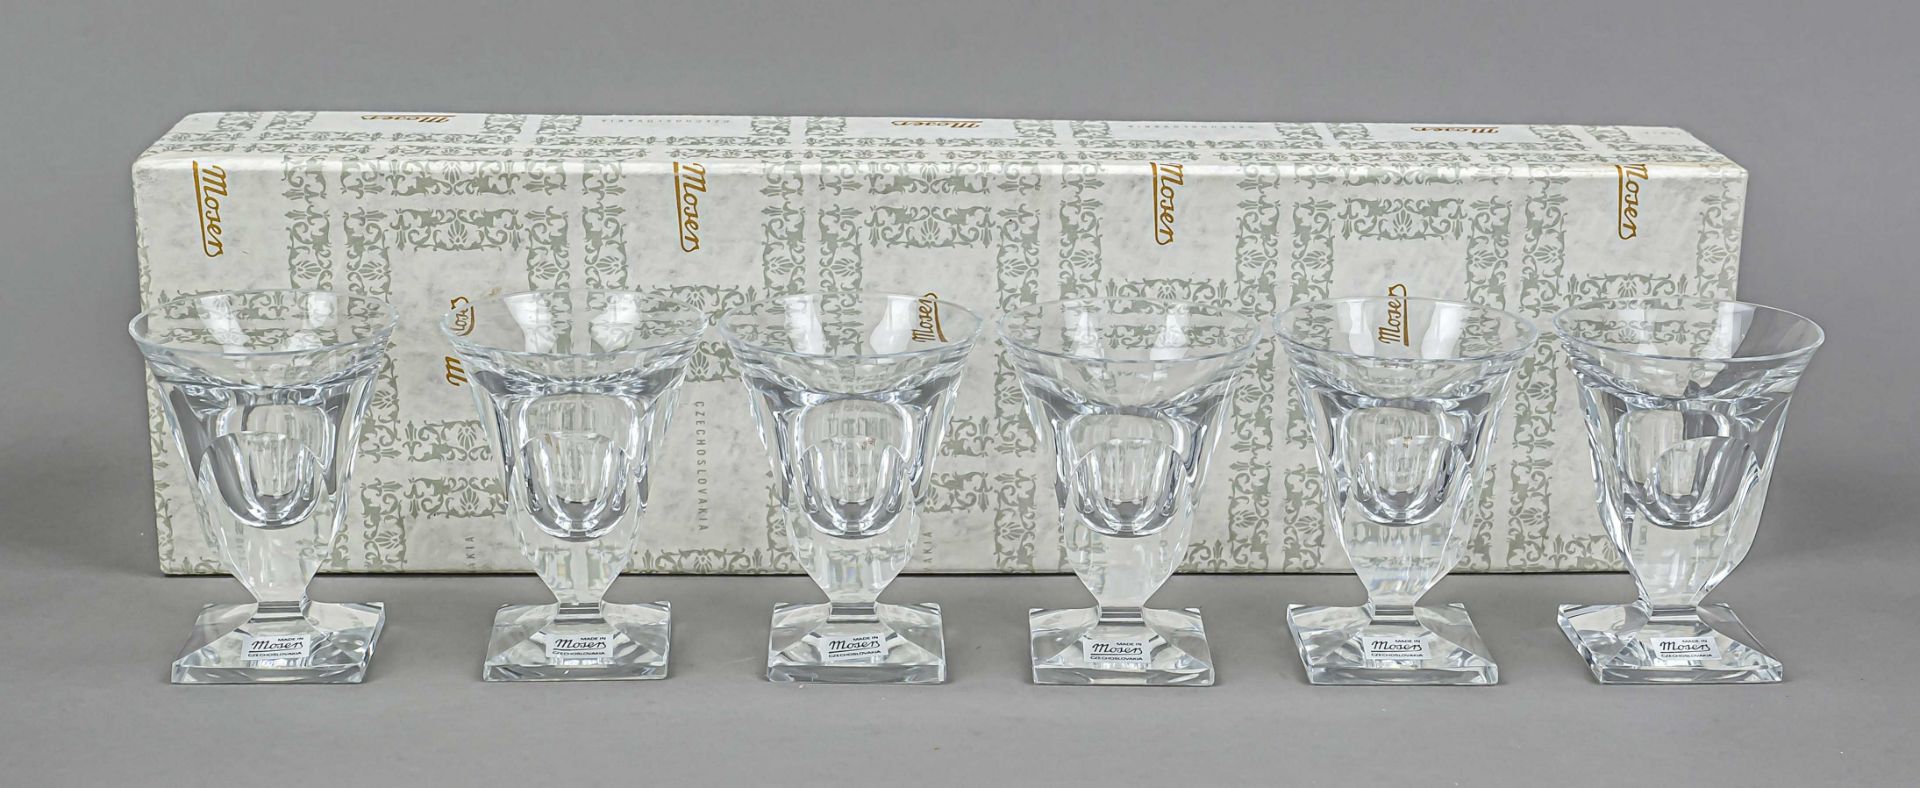 Six large shot glasses, Czechoslovakia, 2nd half 20th century, Moser, Karlovy Vary, square base,